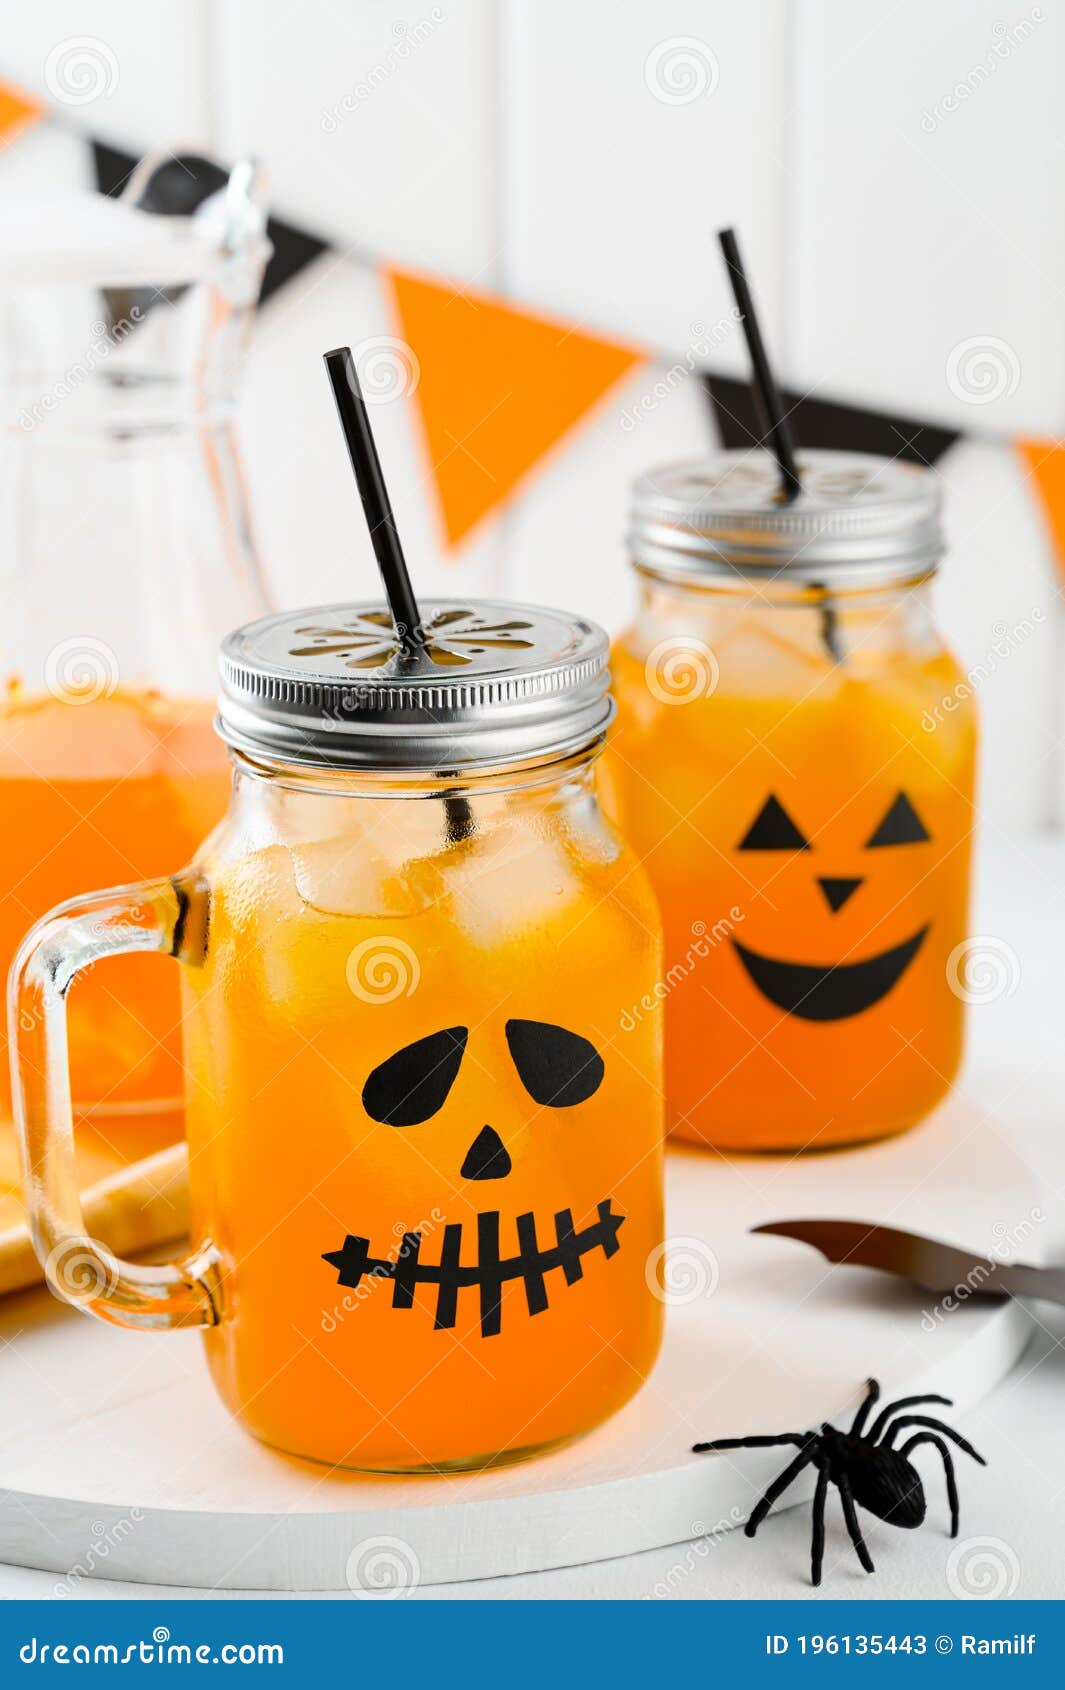 https://thumbs.dreamstime.com/z/halloween-pumpkin-iced-mocktails-glass-jars-decorated-scary-faces-white-table-diy-halloween-party-halloween-pumpkin-196135443.jpg